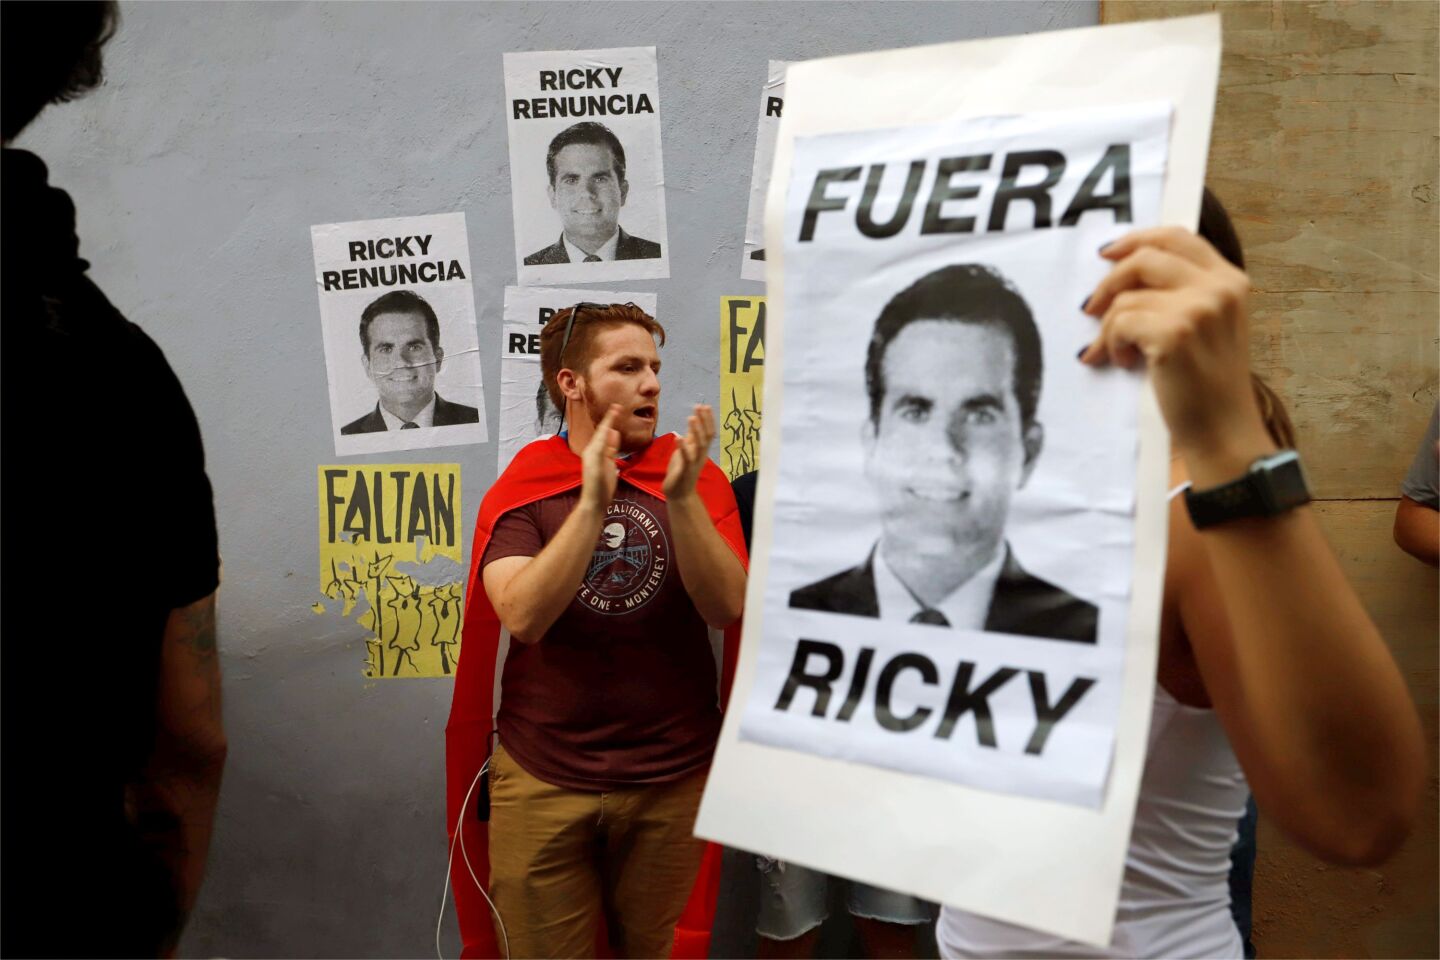 Protesters call for the resignation of Gov. Ricardo Rossello